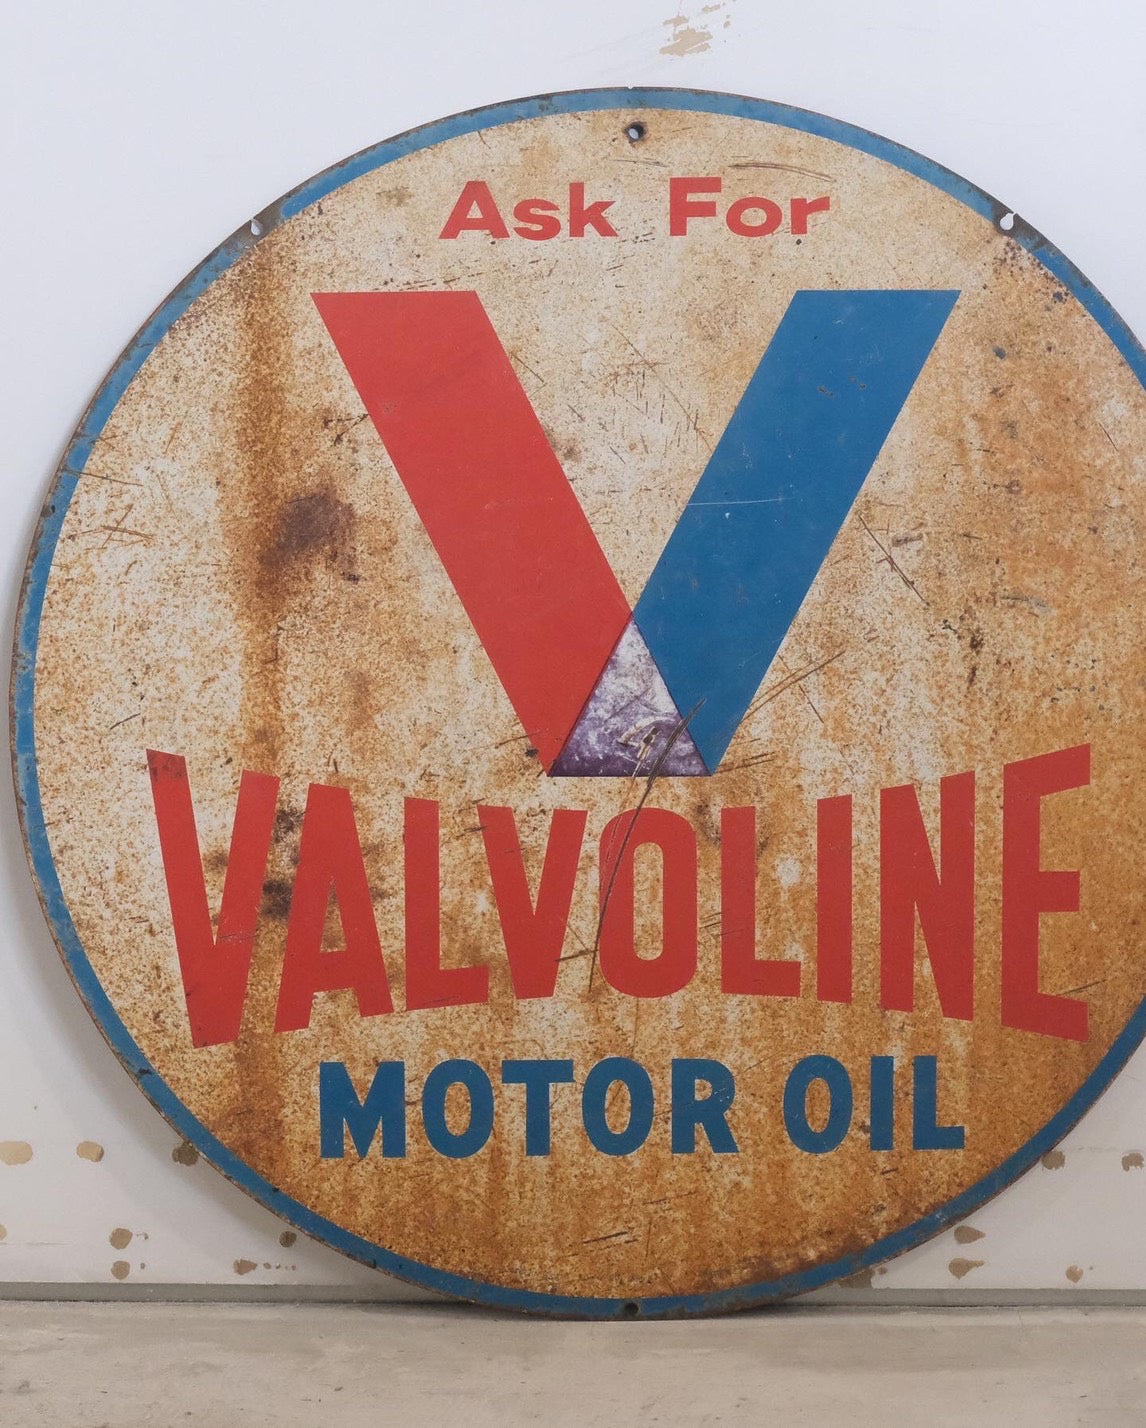 【USA vintage】看板 VALVOLINE motor oil アメリカ 輸入品 モーター オイル ブリキ看板 インテリア